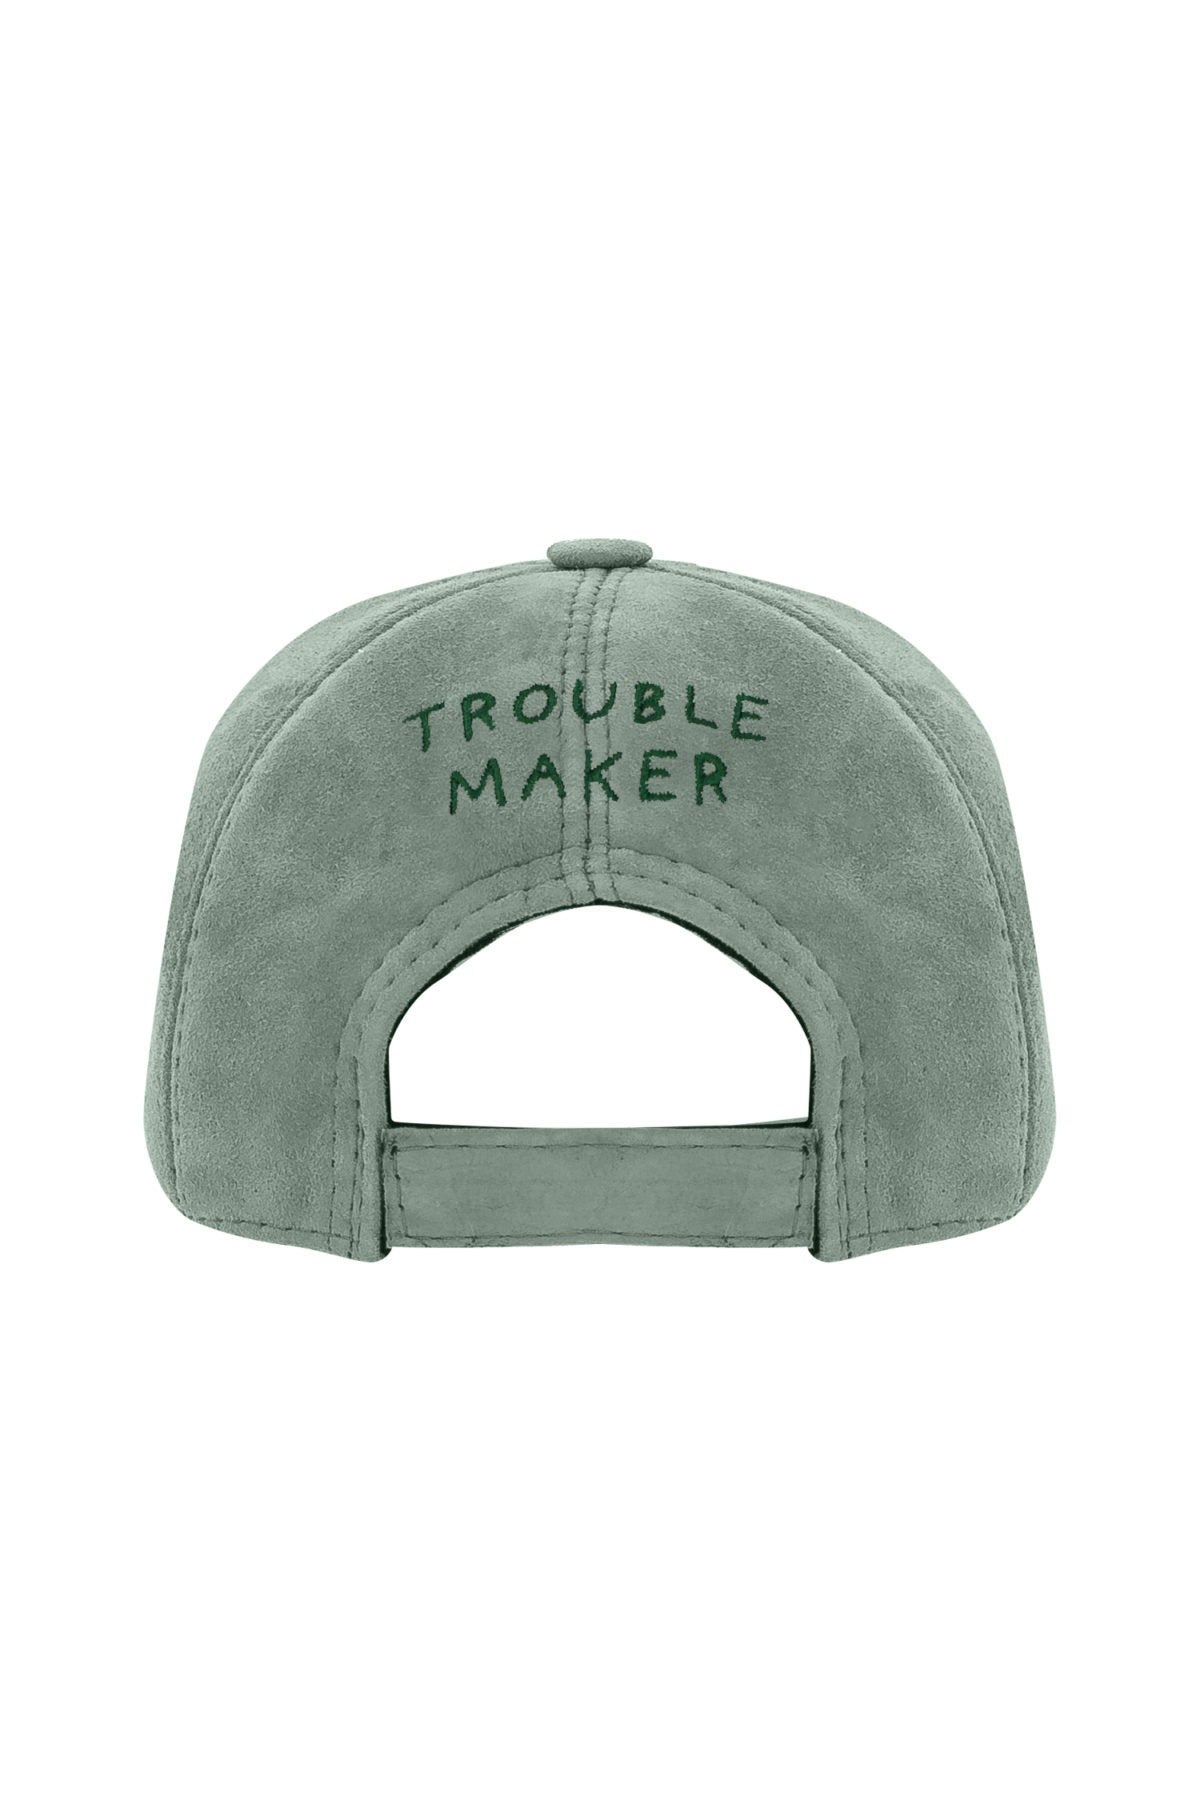 Trouble Maker - Sea Green